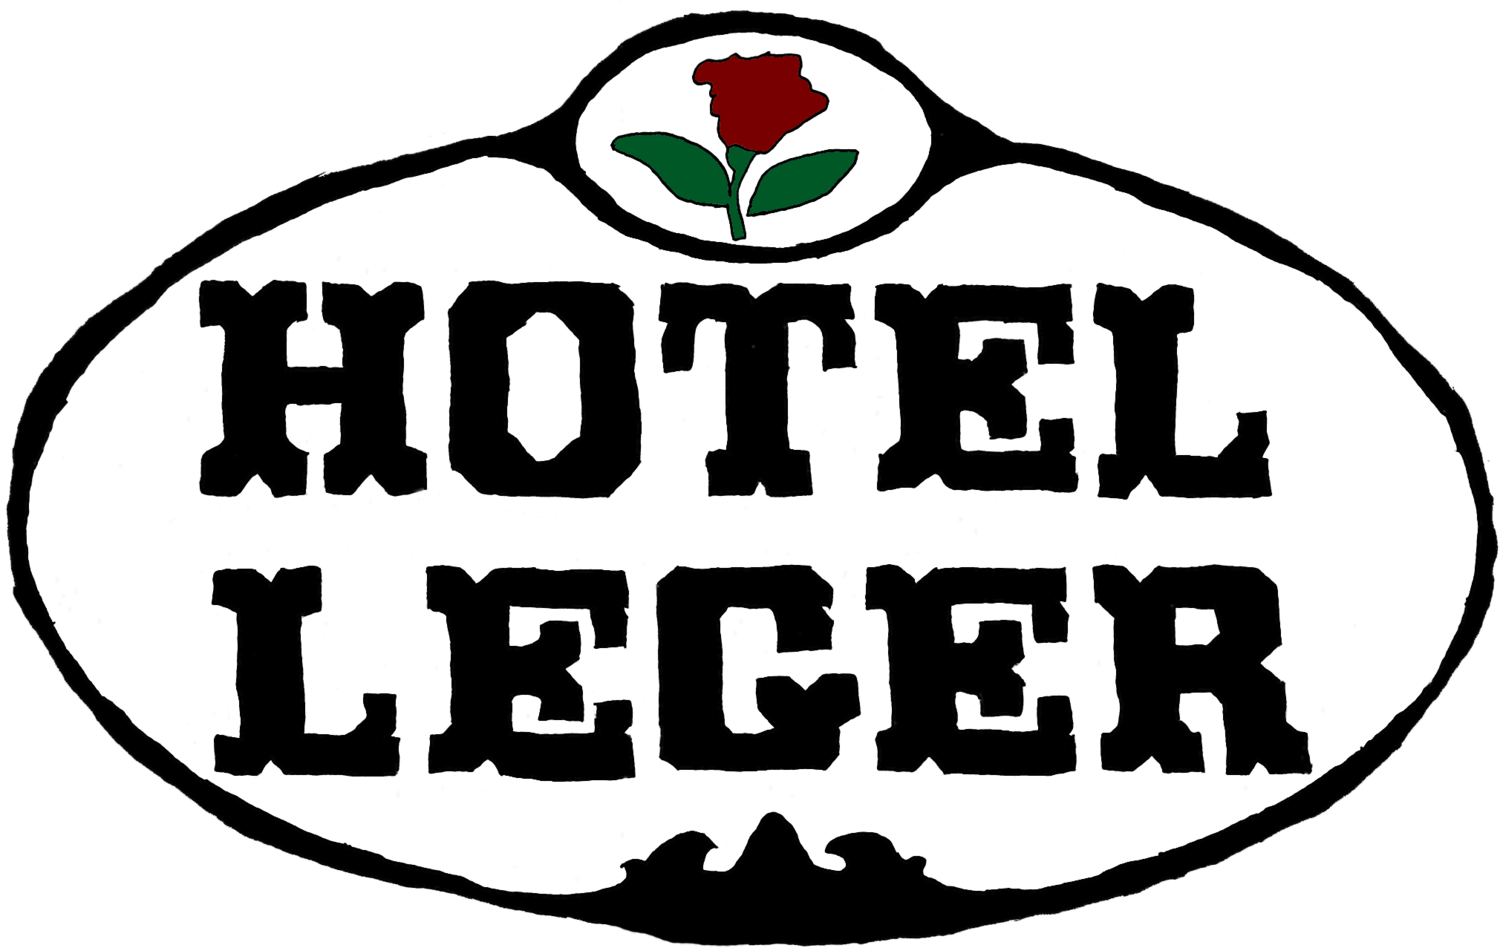 Hotel Léger Restaurant and Bar